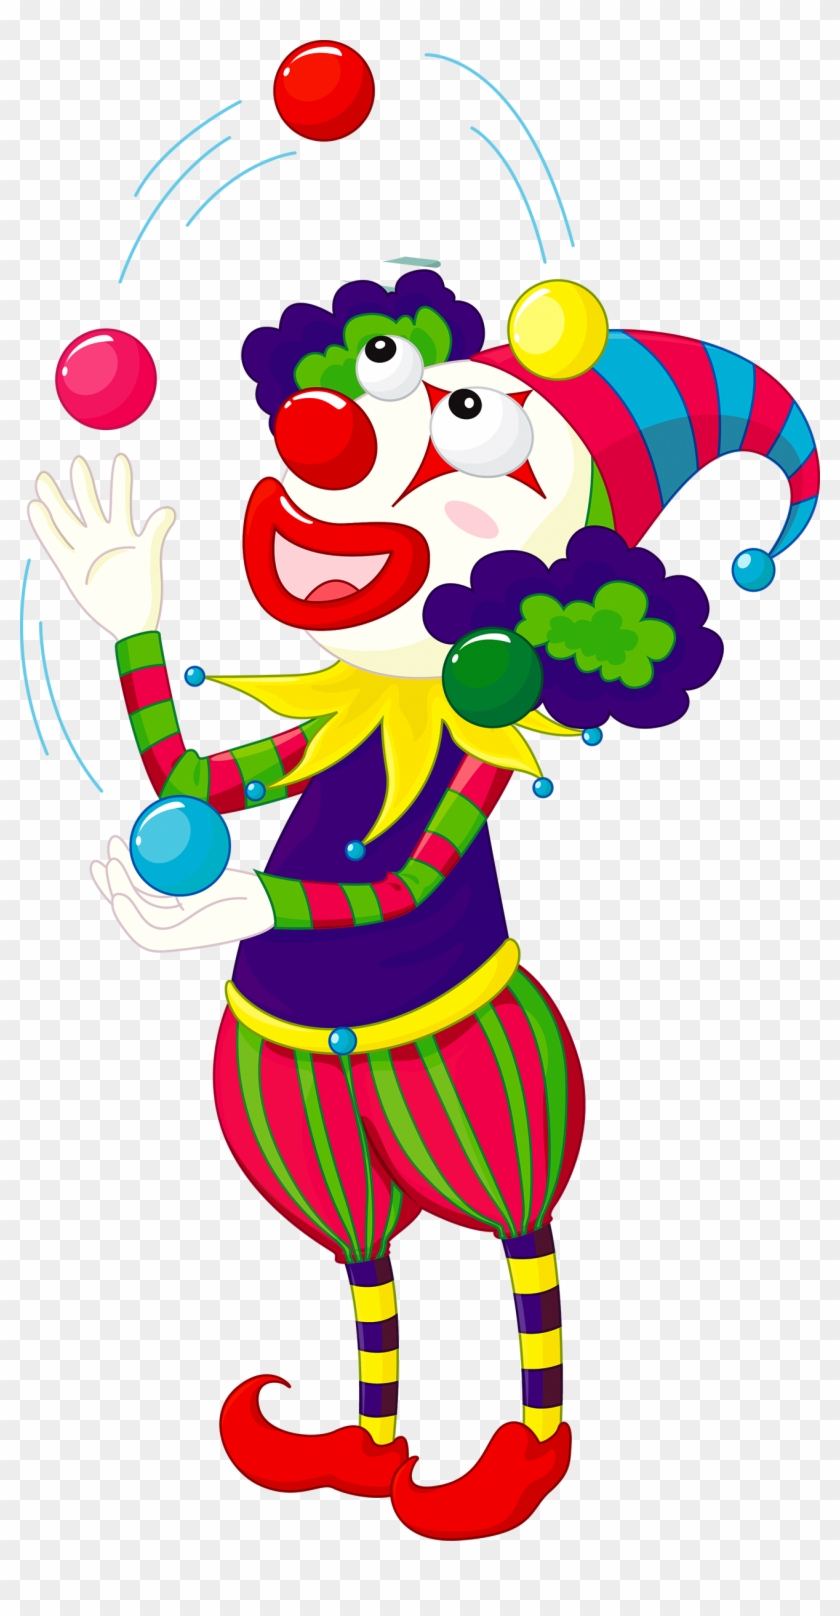 Clown Circus Juggling Illustration - Clown Circus Juggling Illustration #198284